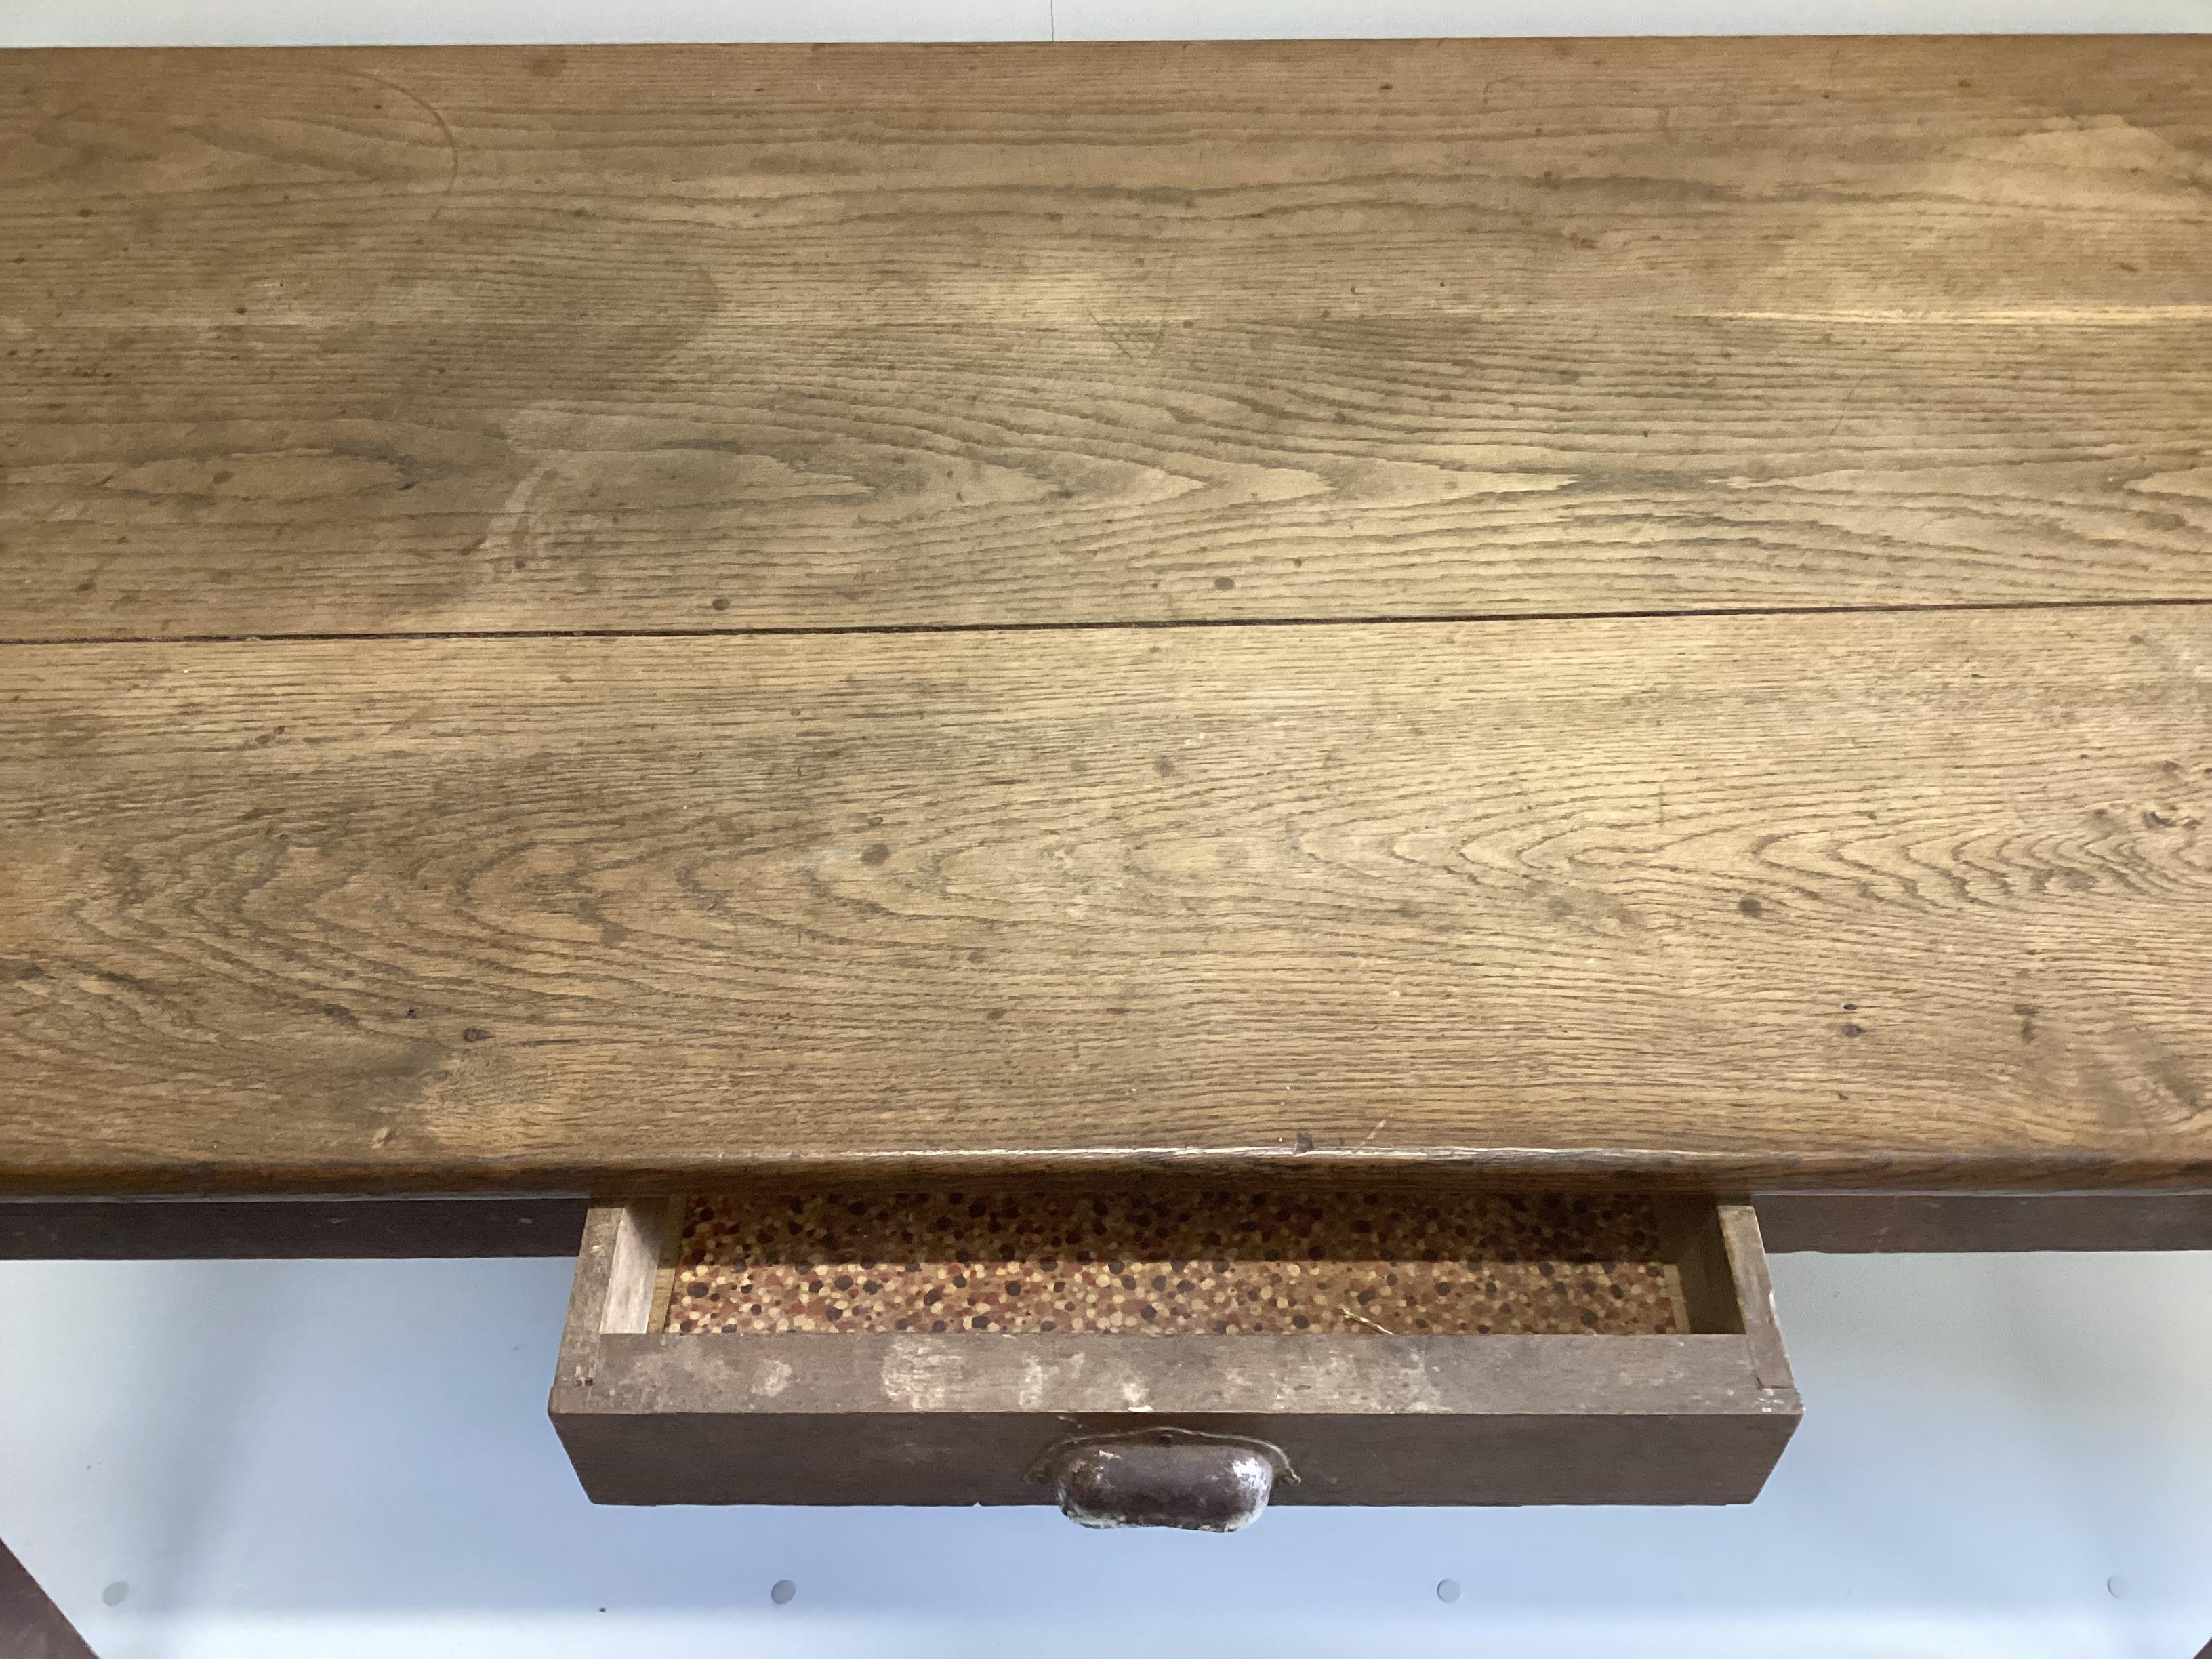 A 19th French rectangular oak kitchen table, width 139cm, depth 76cm, height 74cm